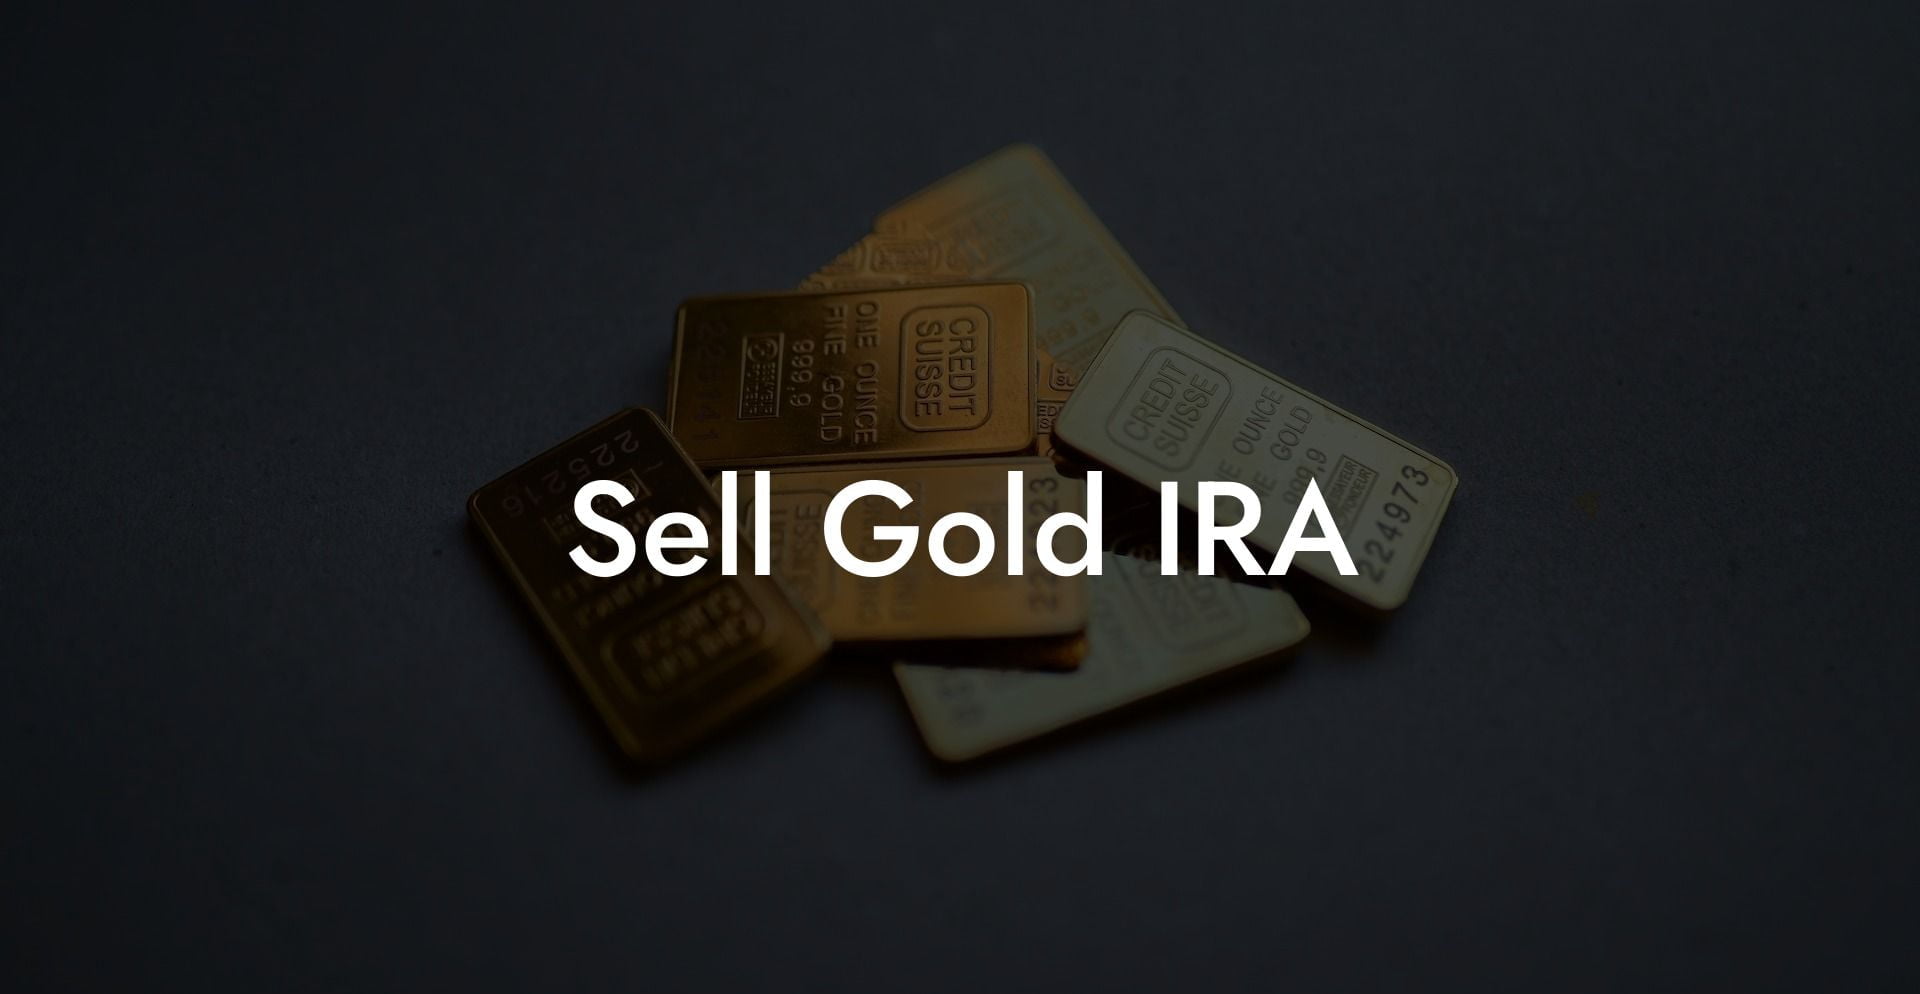 Sell Gold IRA